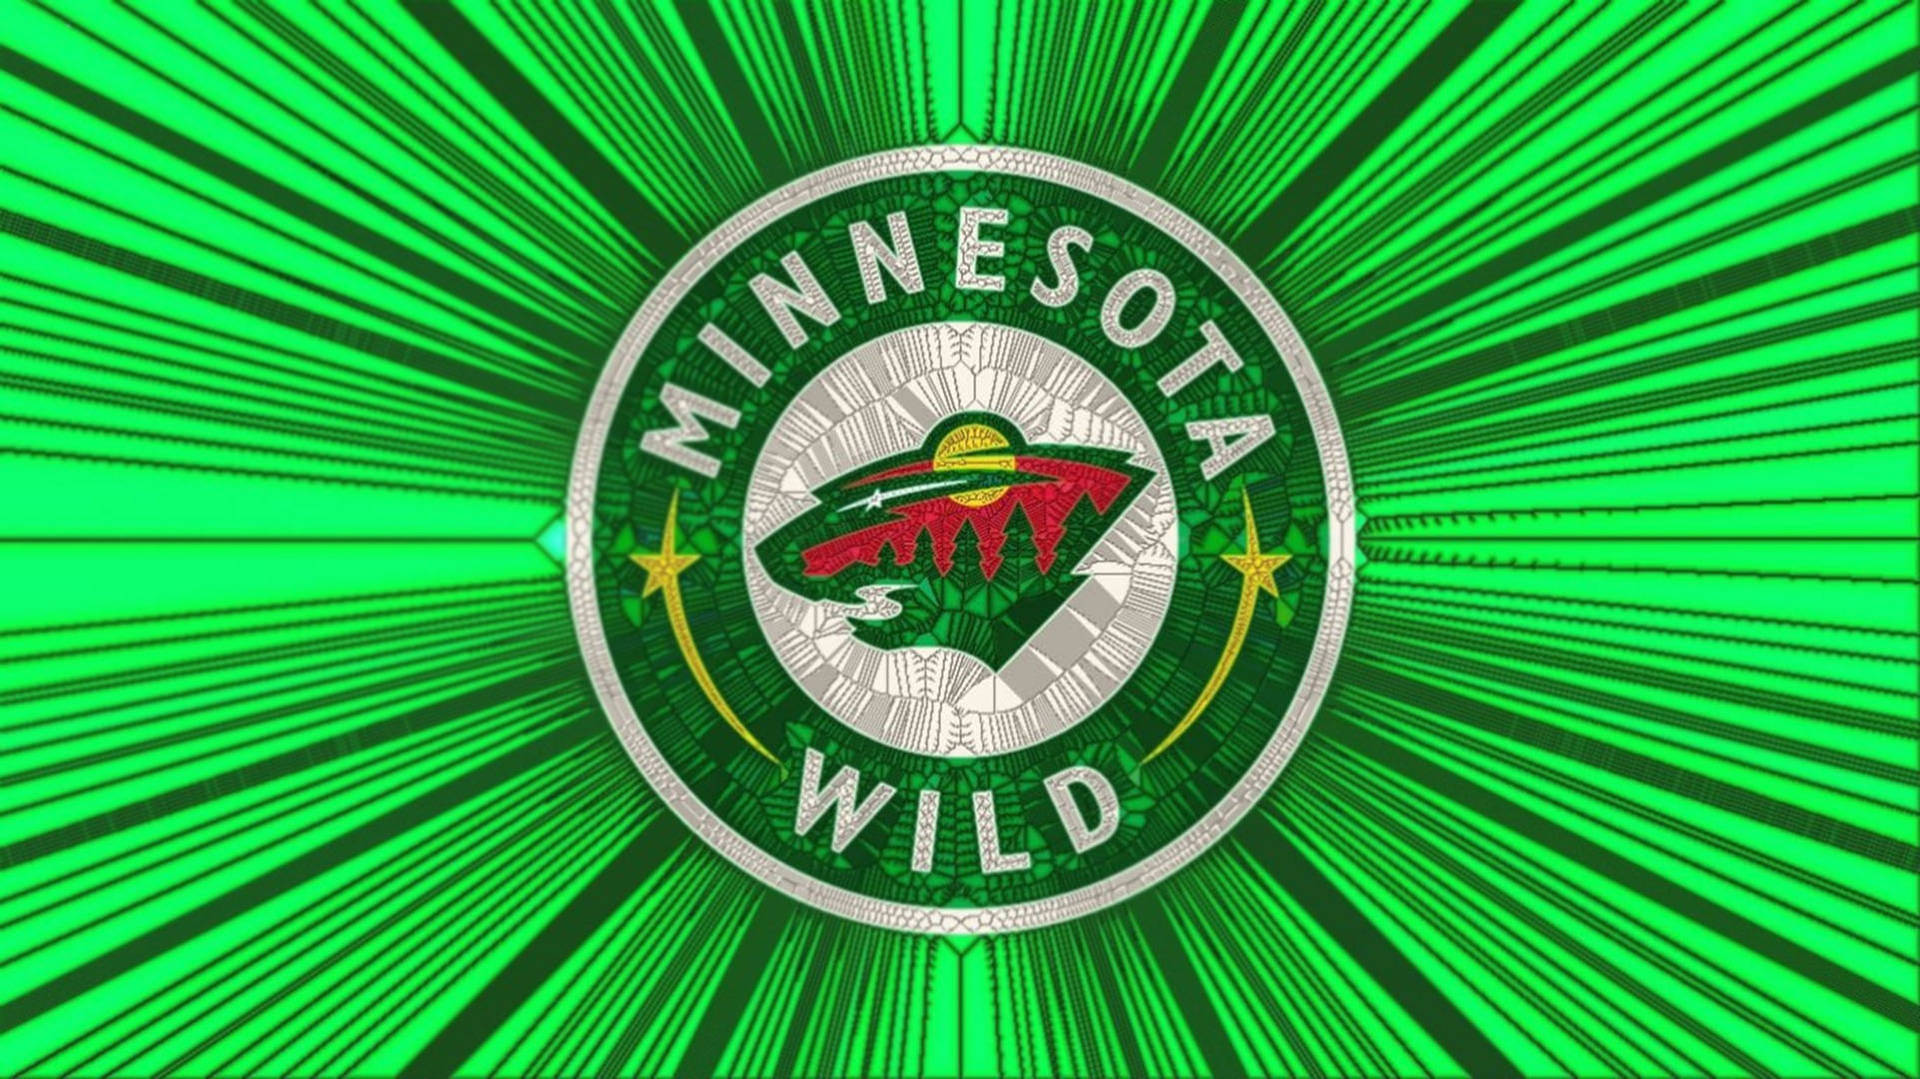 Minnesota Wild Green Rays Background